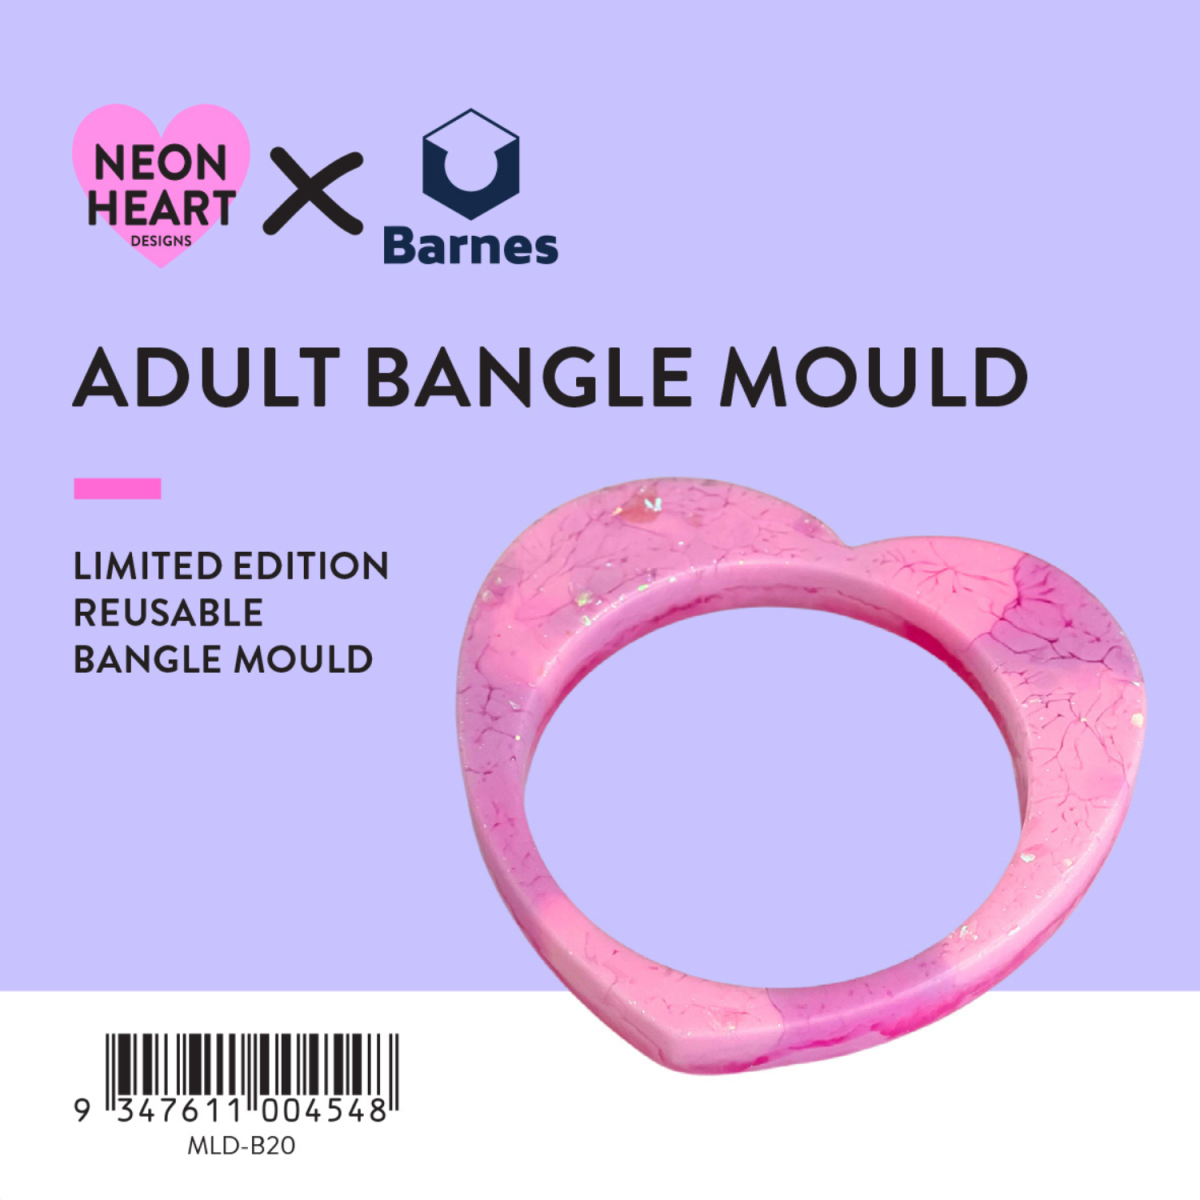 Neon Heart Adult Bangle Mould